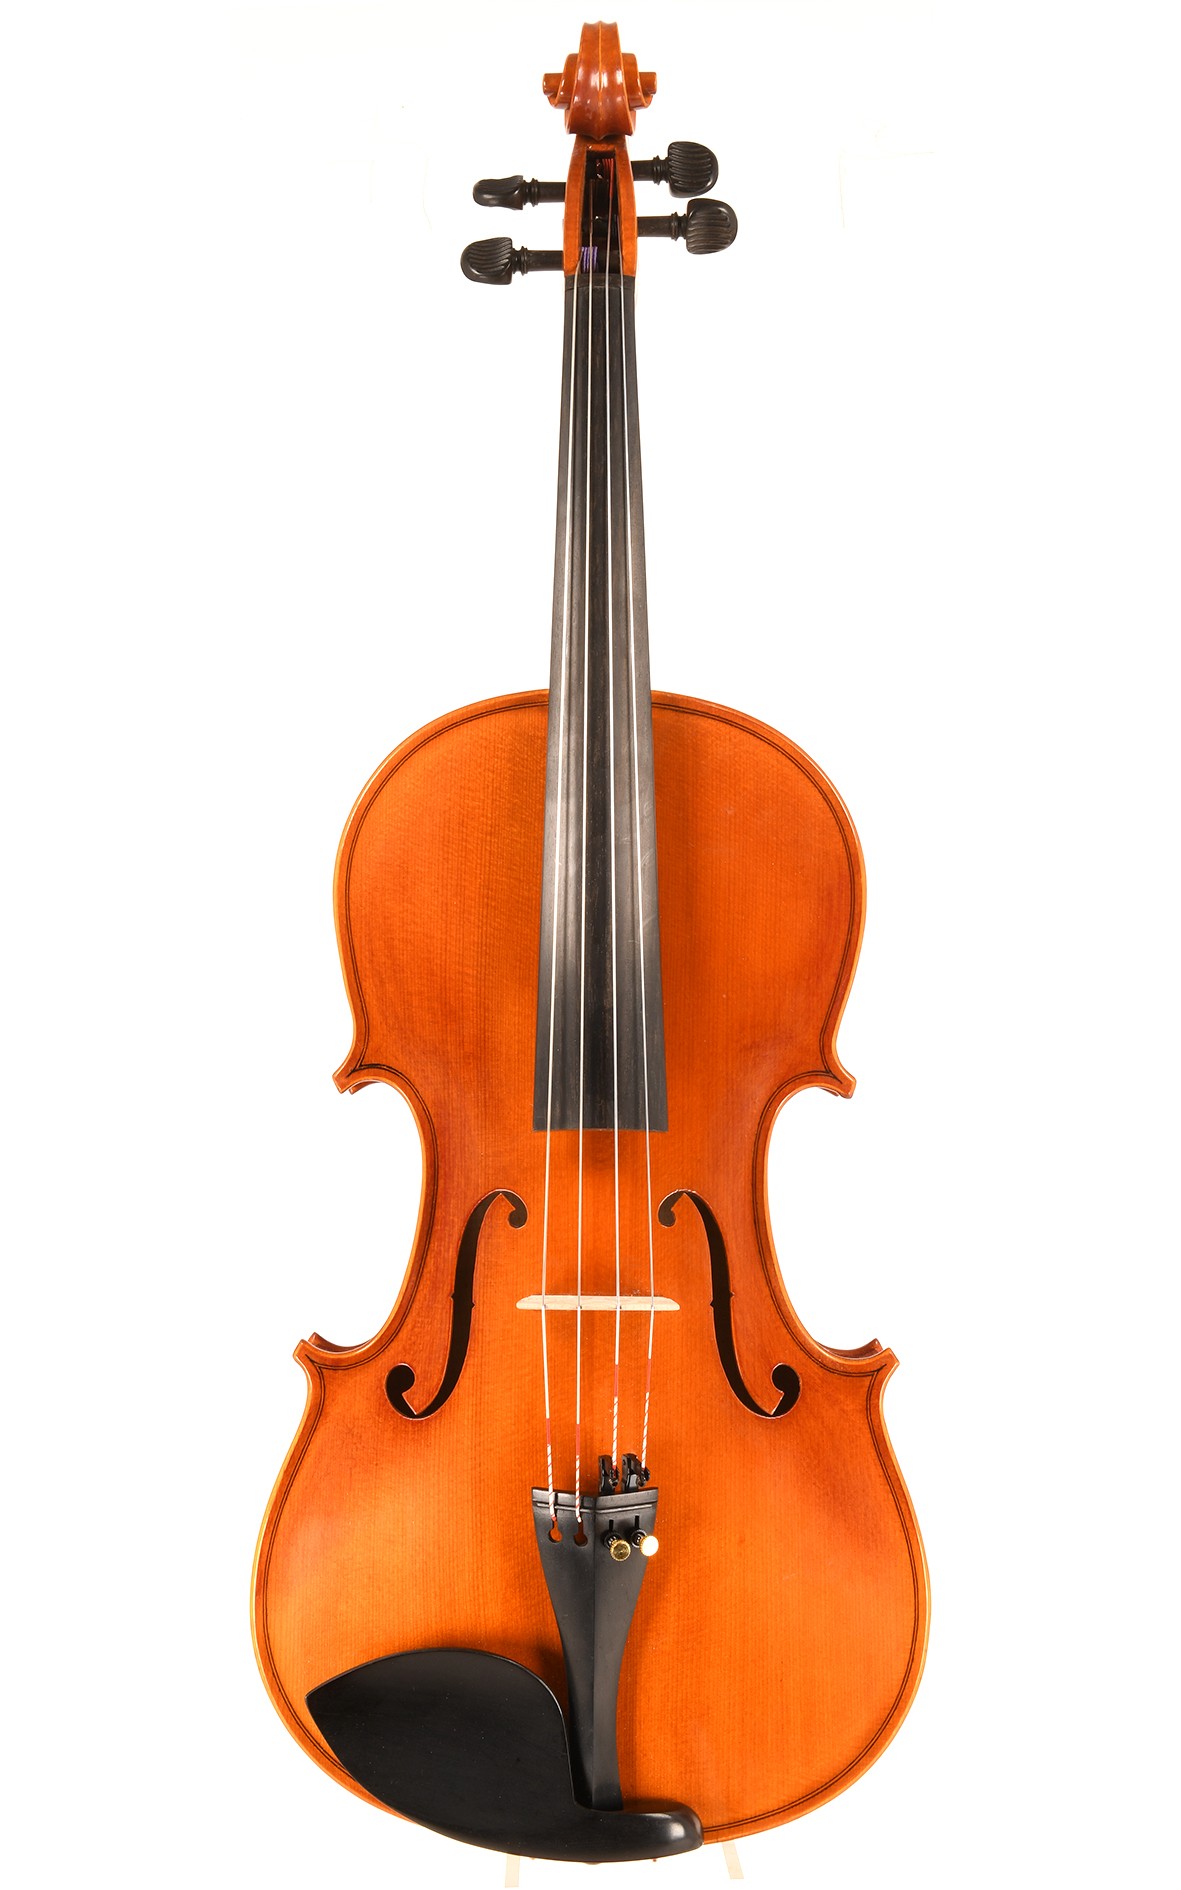 Modern contemporary viola